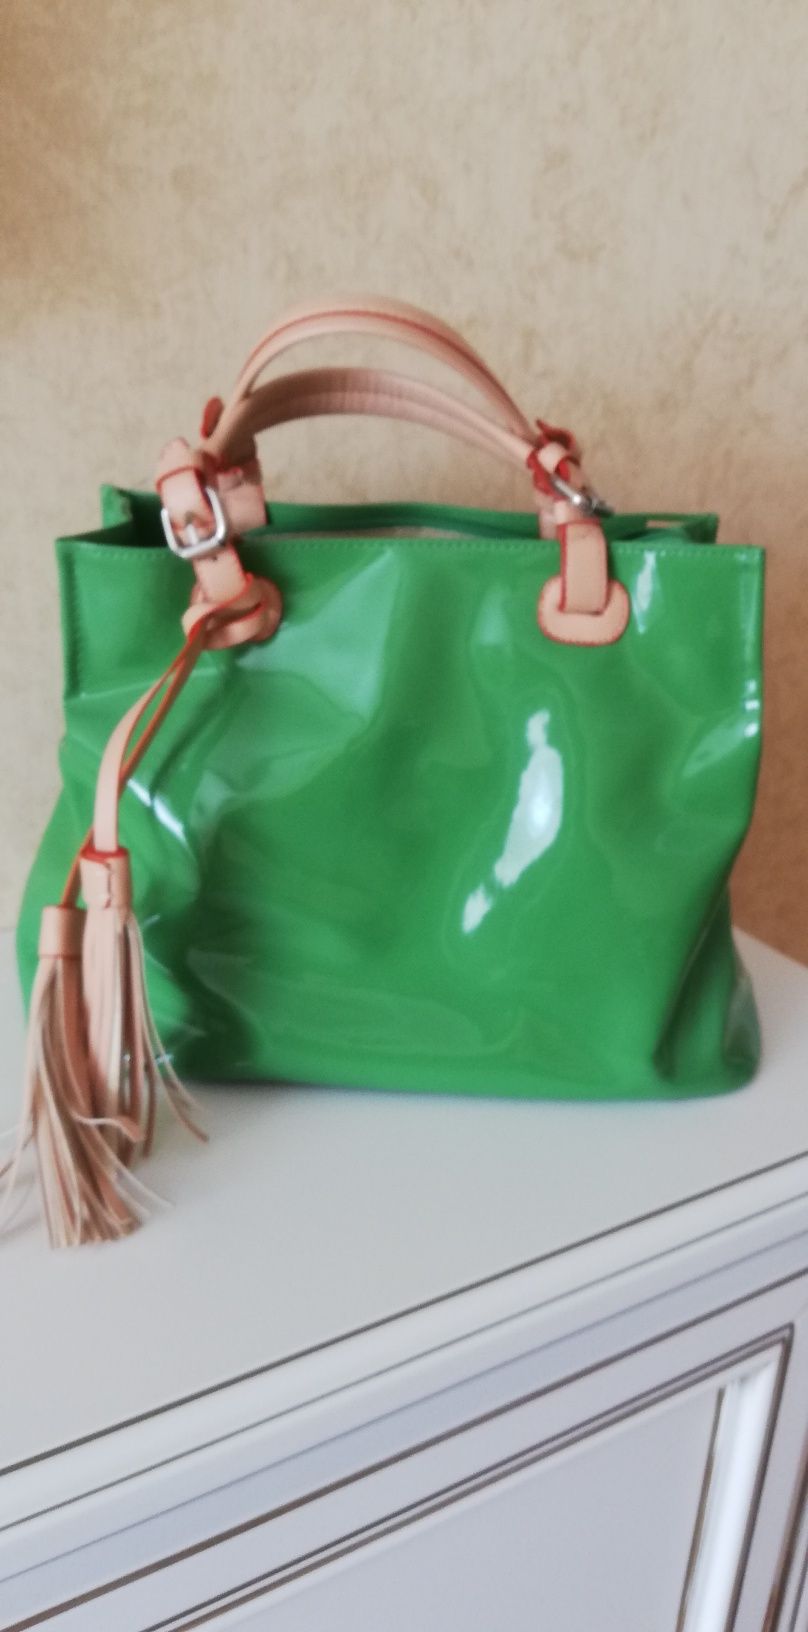 Продам лаковую зелёную сумку